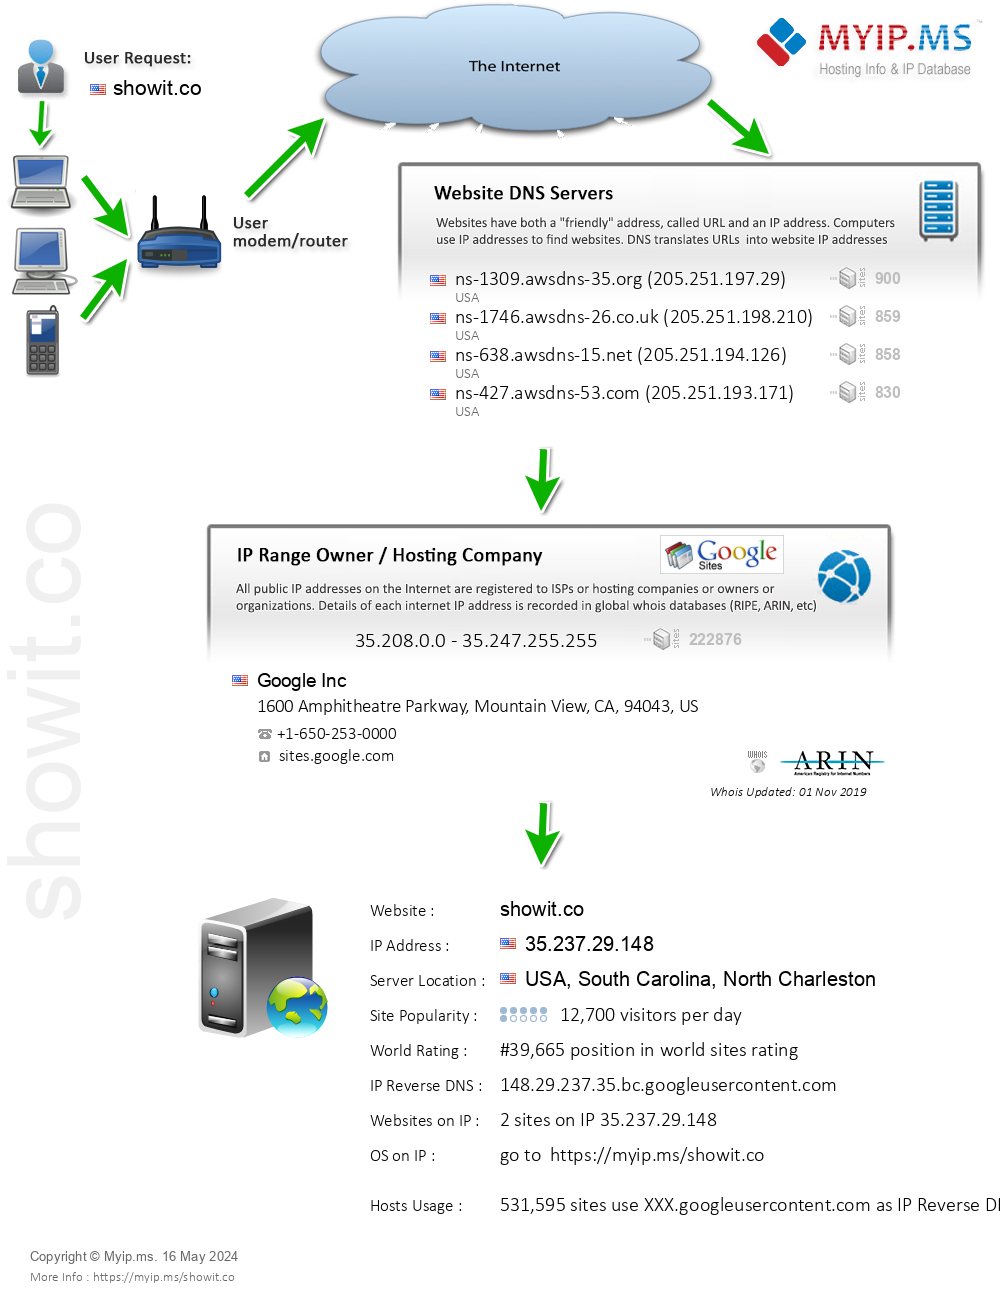 Showit.co - Website Hosting Visual IP Diagram